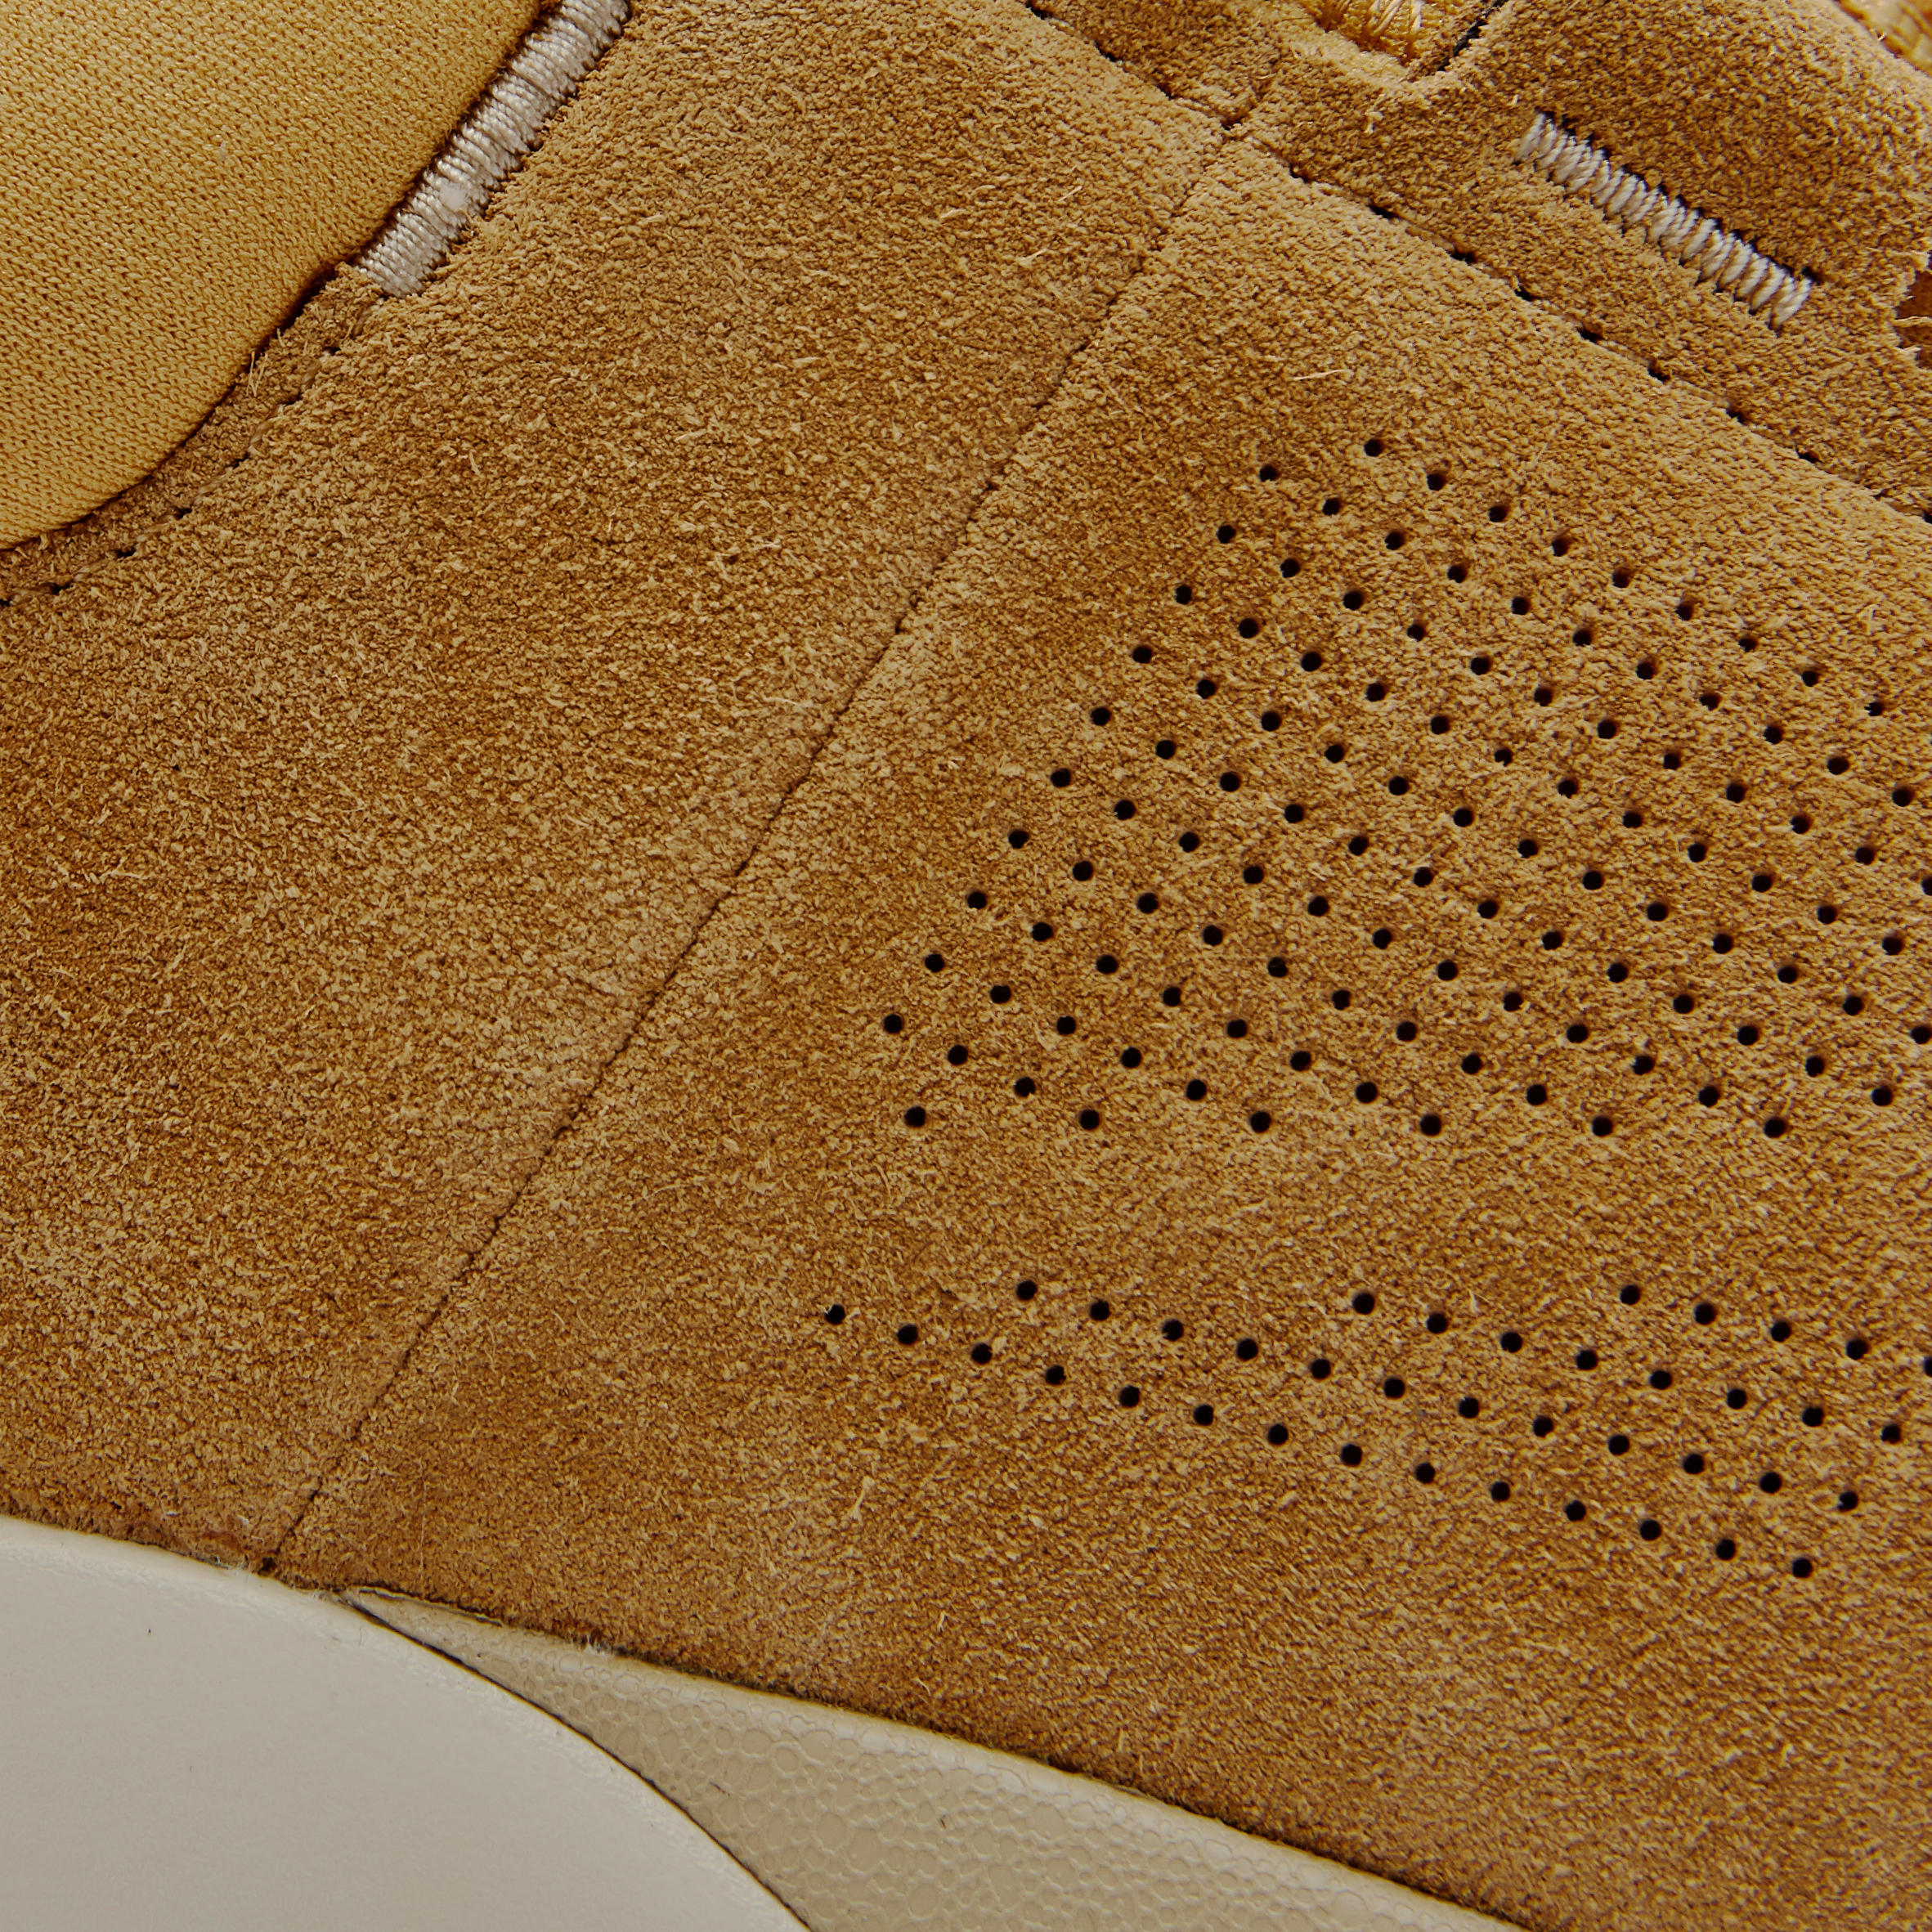 Actiwalk Comfort Leather Men's Urban Walking Shoes - Camel 34/43